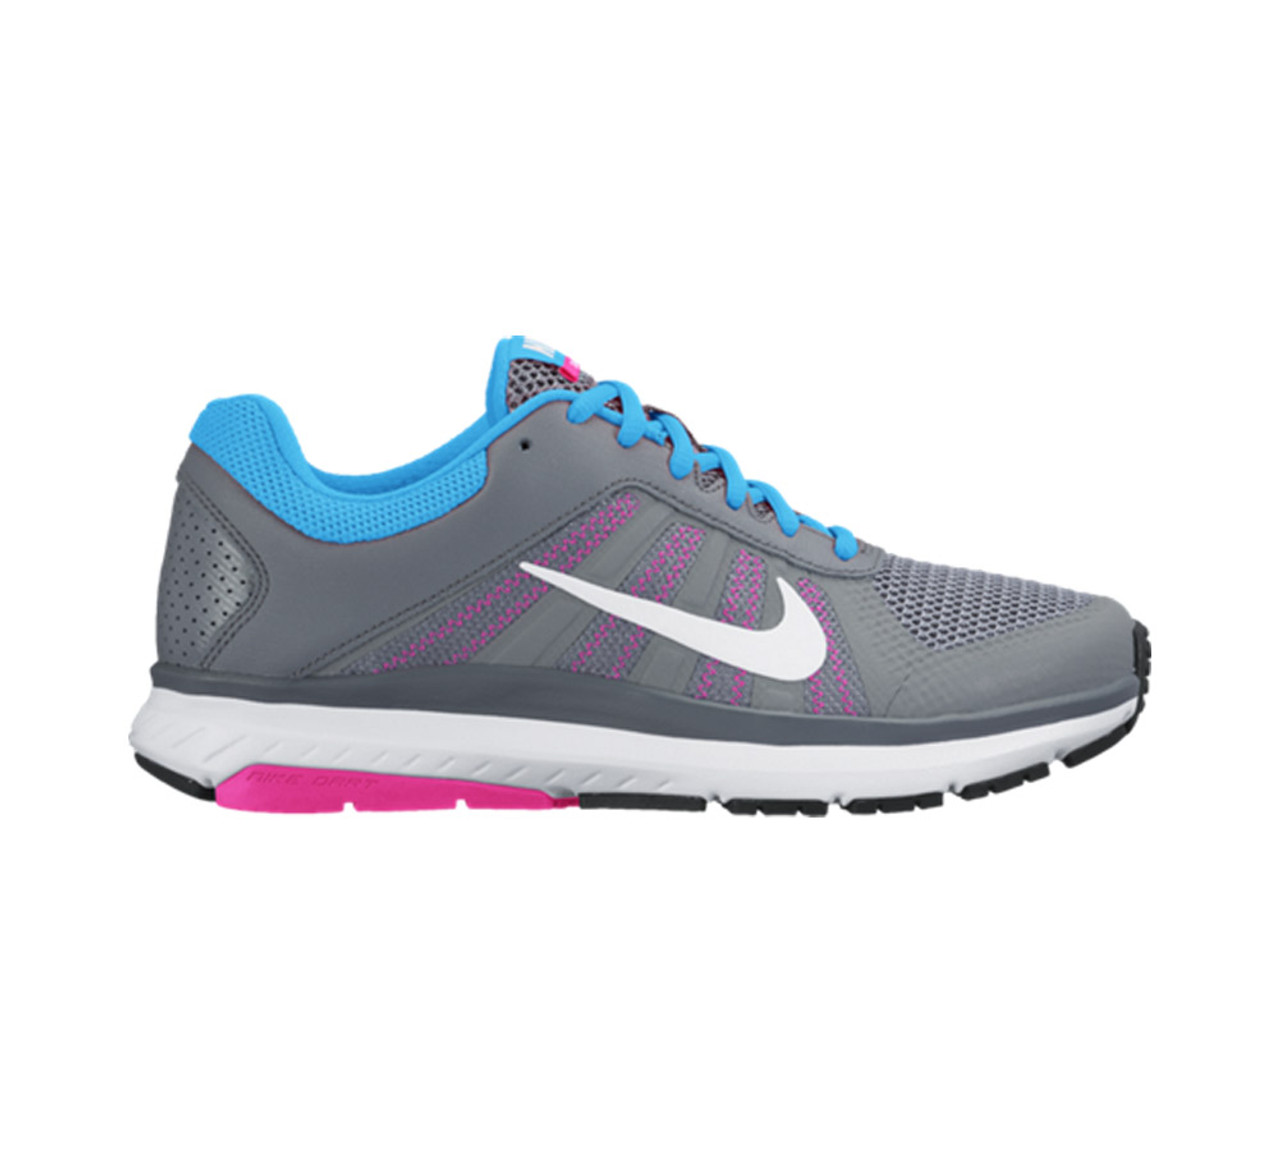 Nike Women's Dart 12 Running Shoe - Grey | Discount Nike Ladies Athletic &  More - Shoolu.com | Shoolu.com